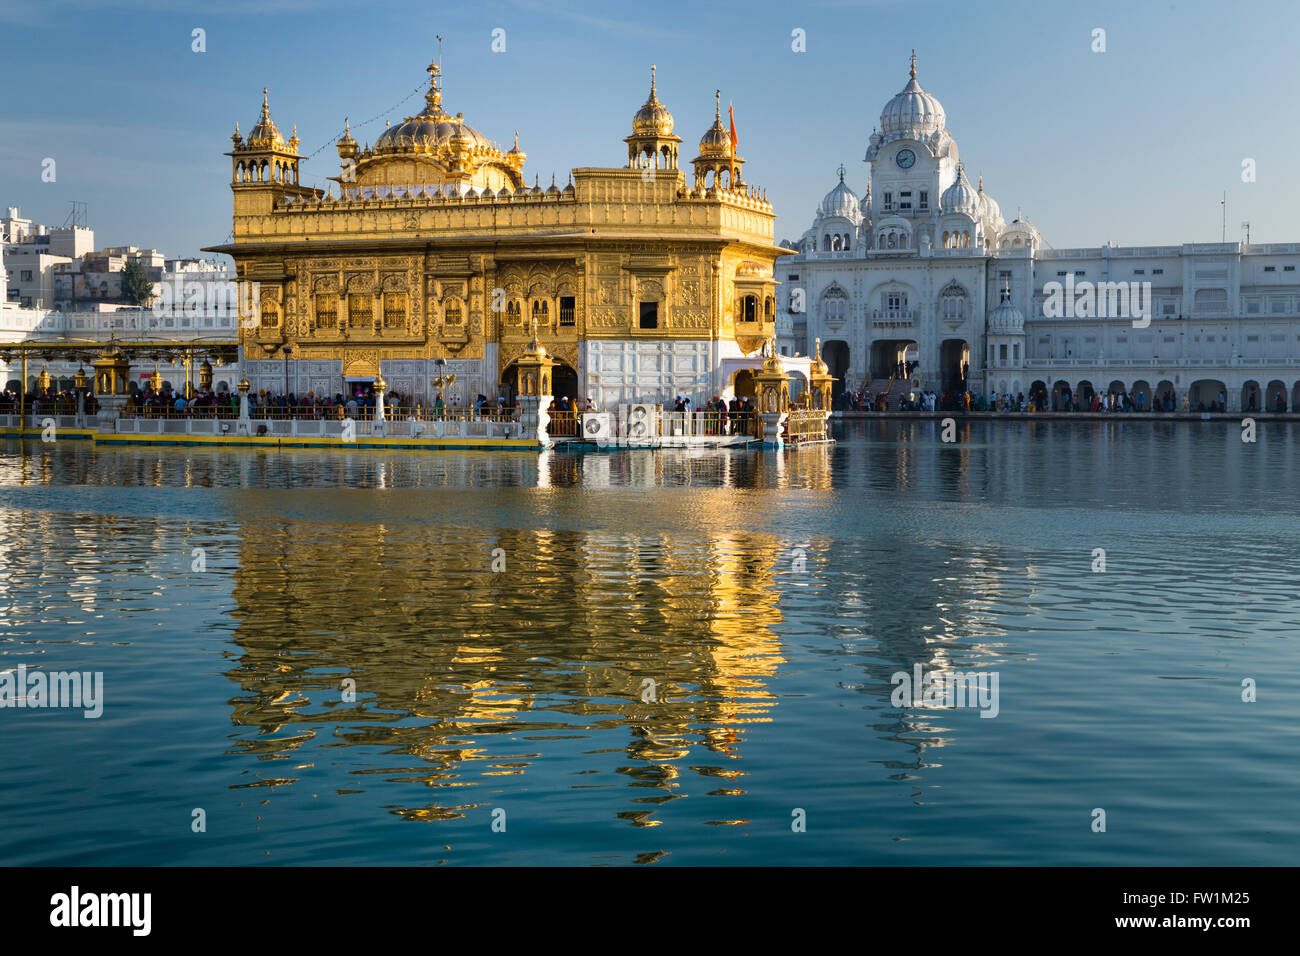 Sikh Gurdwara or Sikh temple Harmandir Sahib, also referred to as the Golden Temple, Amritsar, Punjab, India Stock Photo